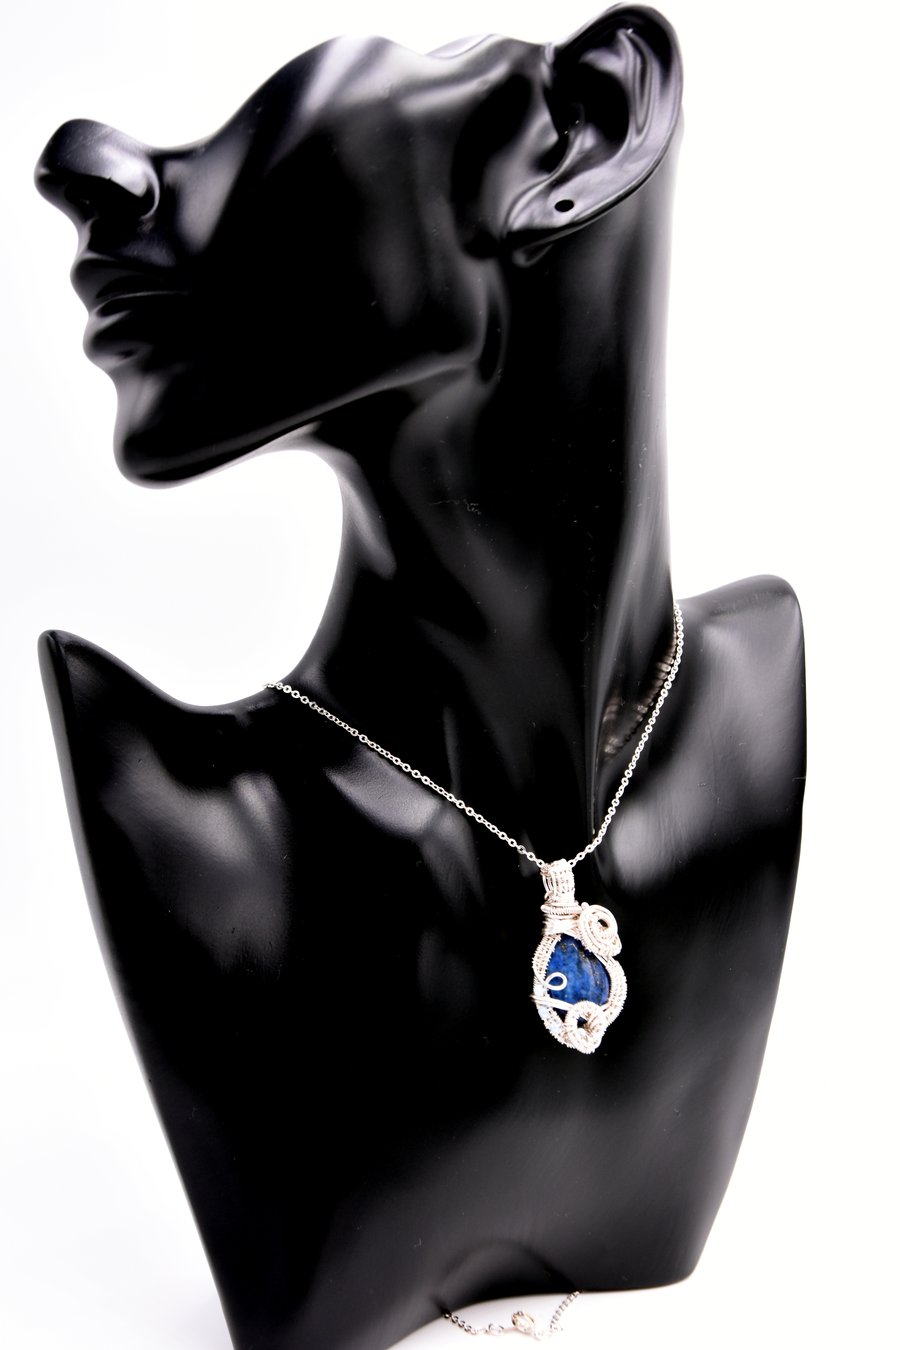 Lapis lazuli pendant; wire wrapped pendant